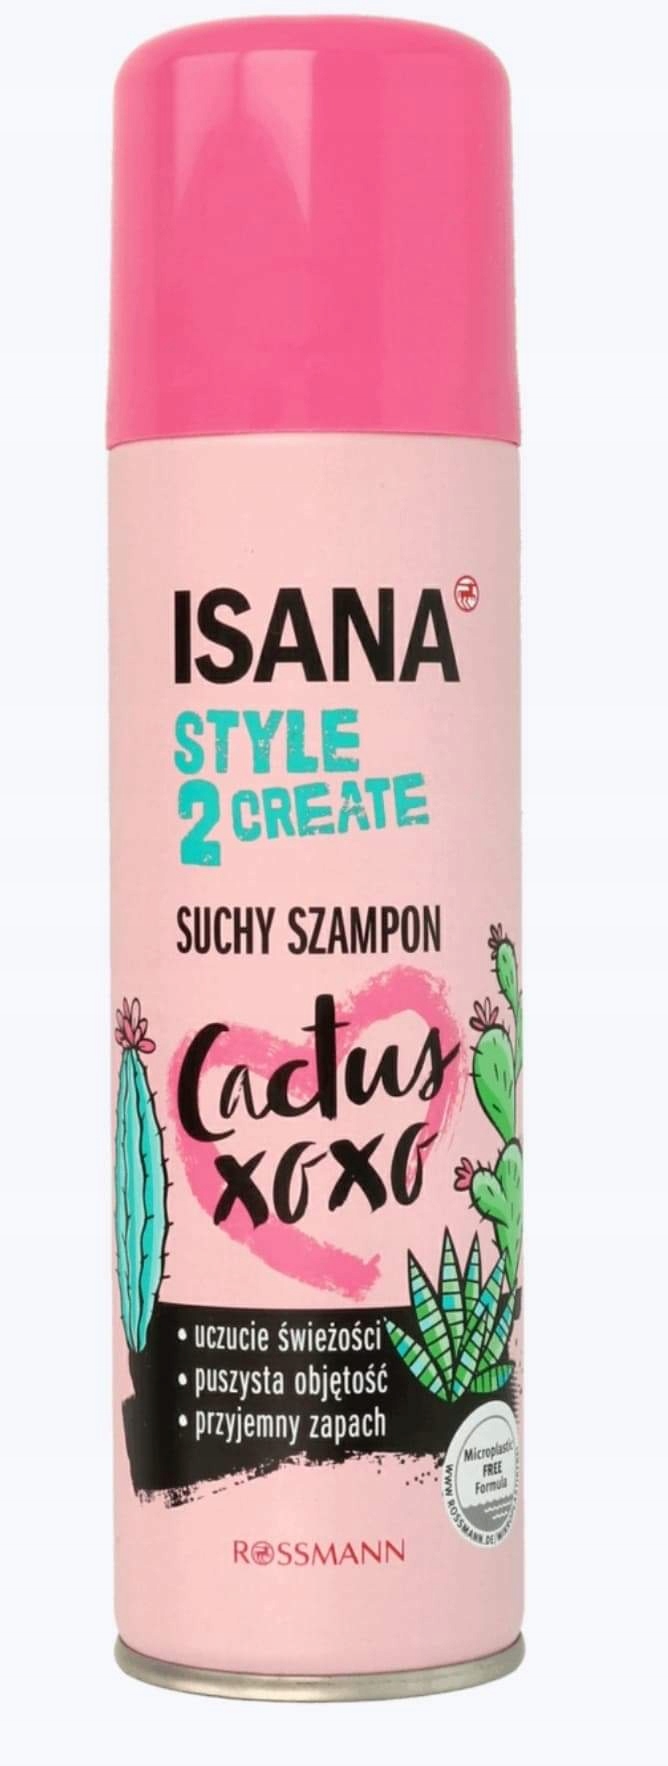 isana suchy szampon style 2 create